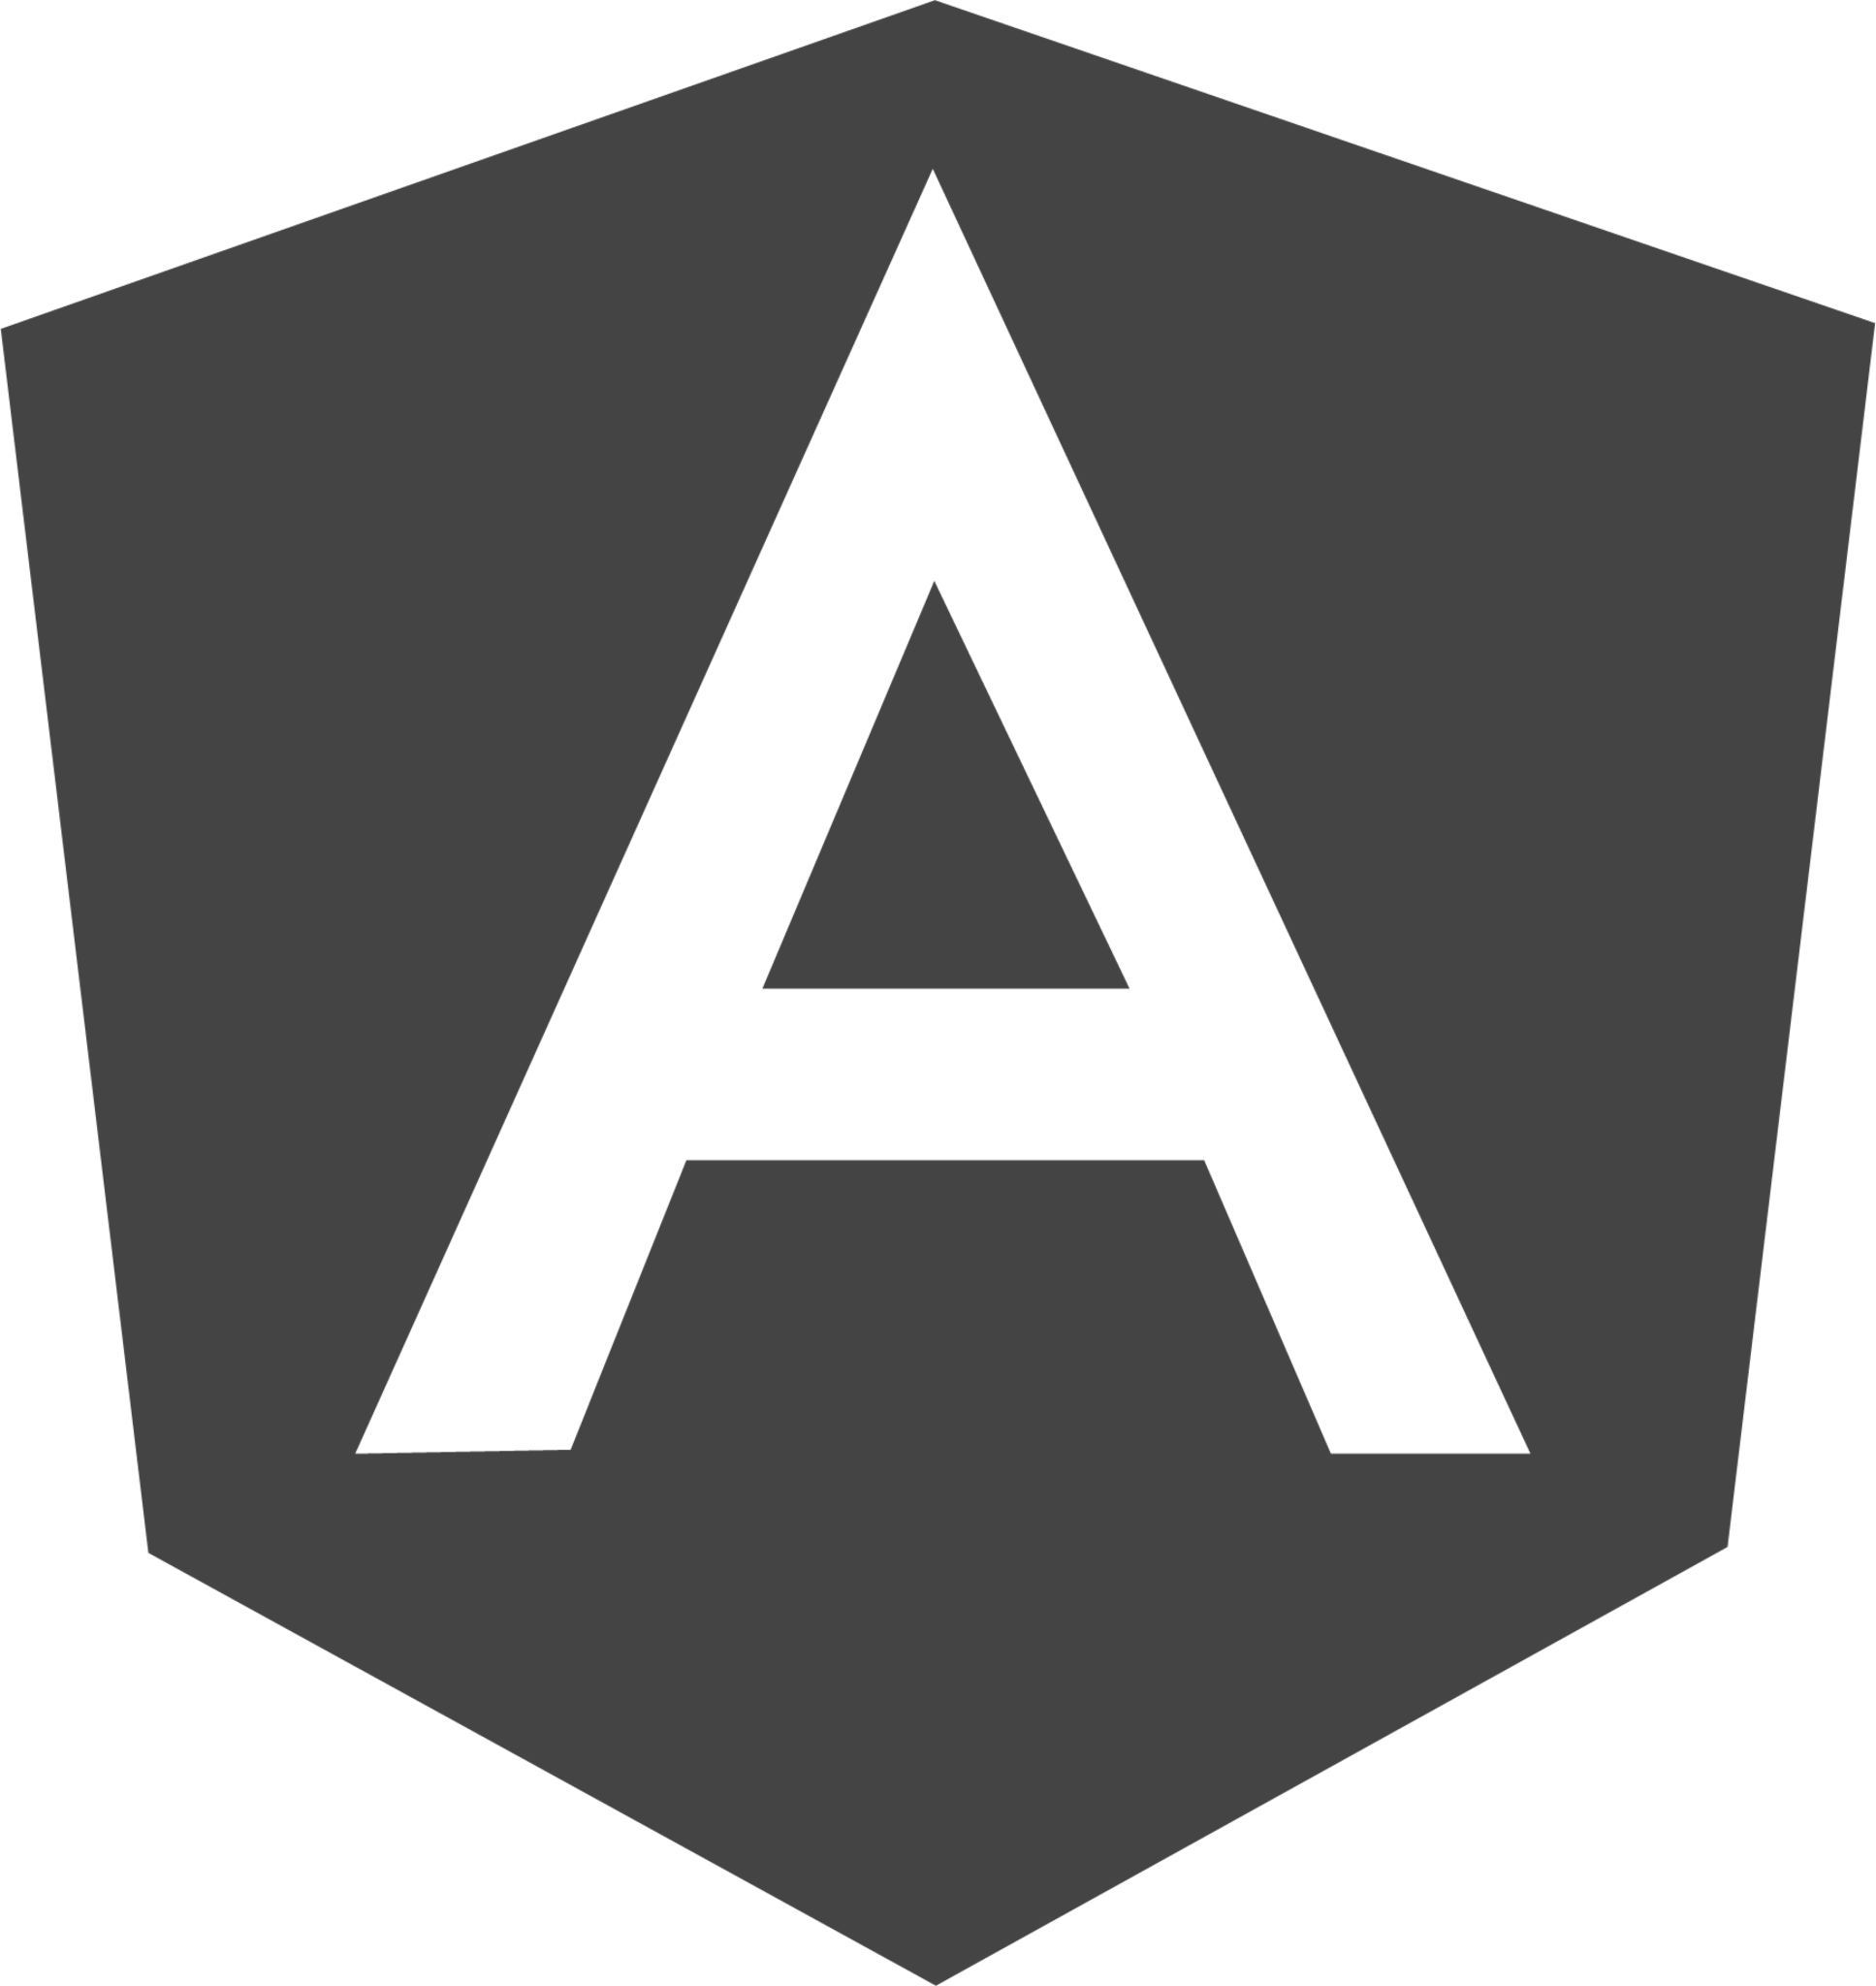 angular simple icon